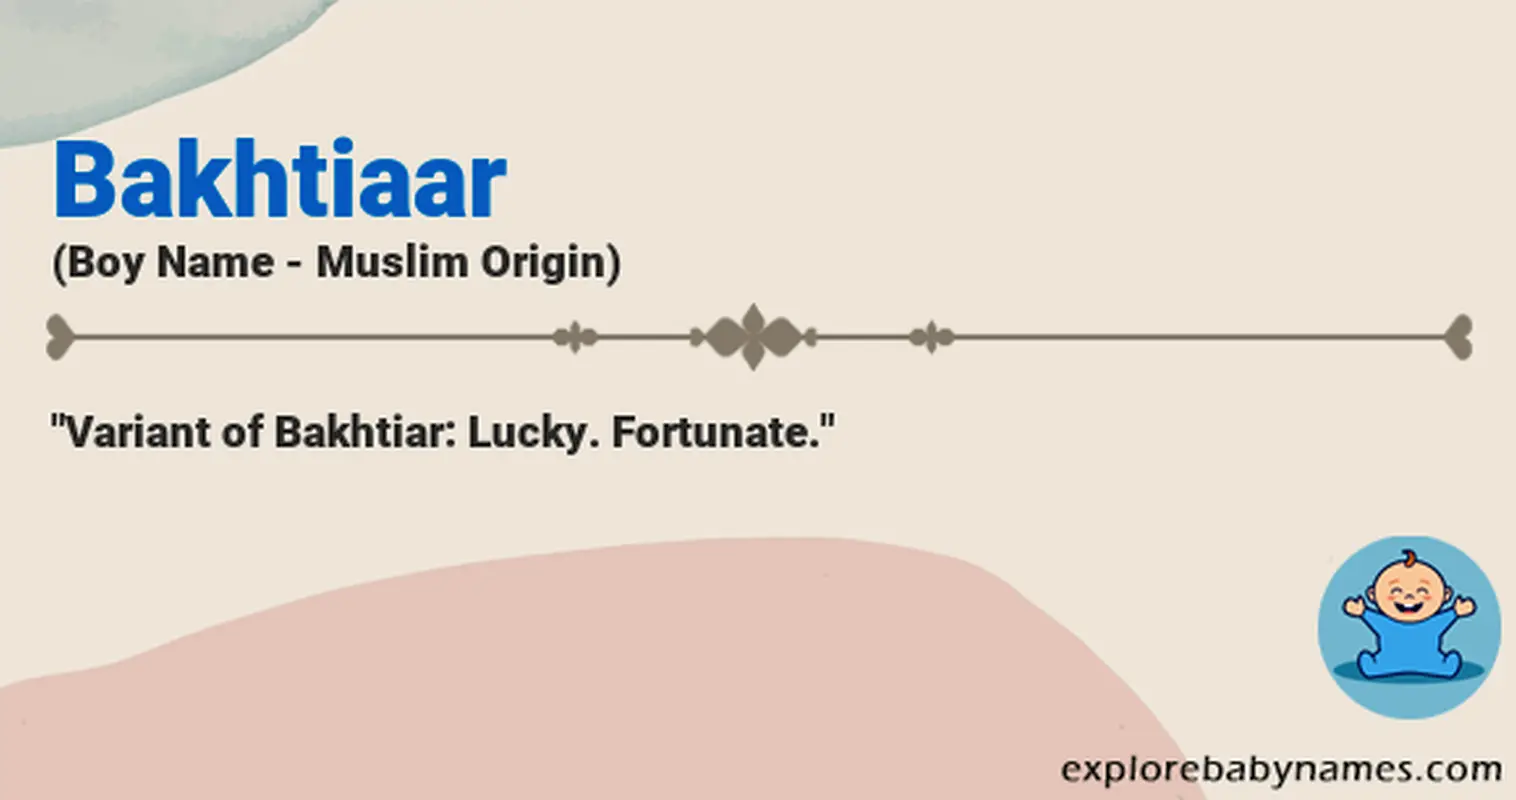 Meaning of Bakhtiaar